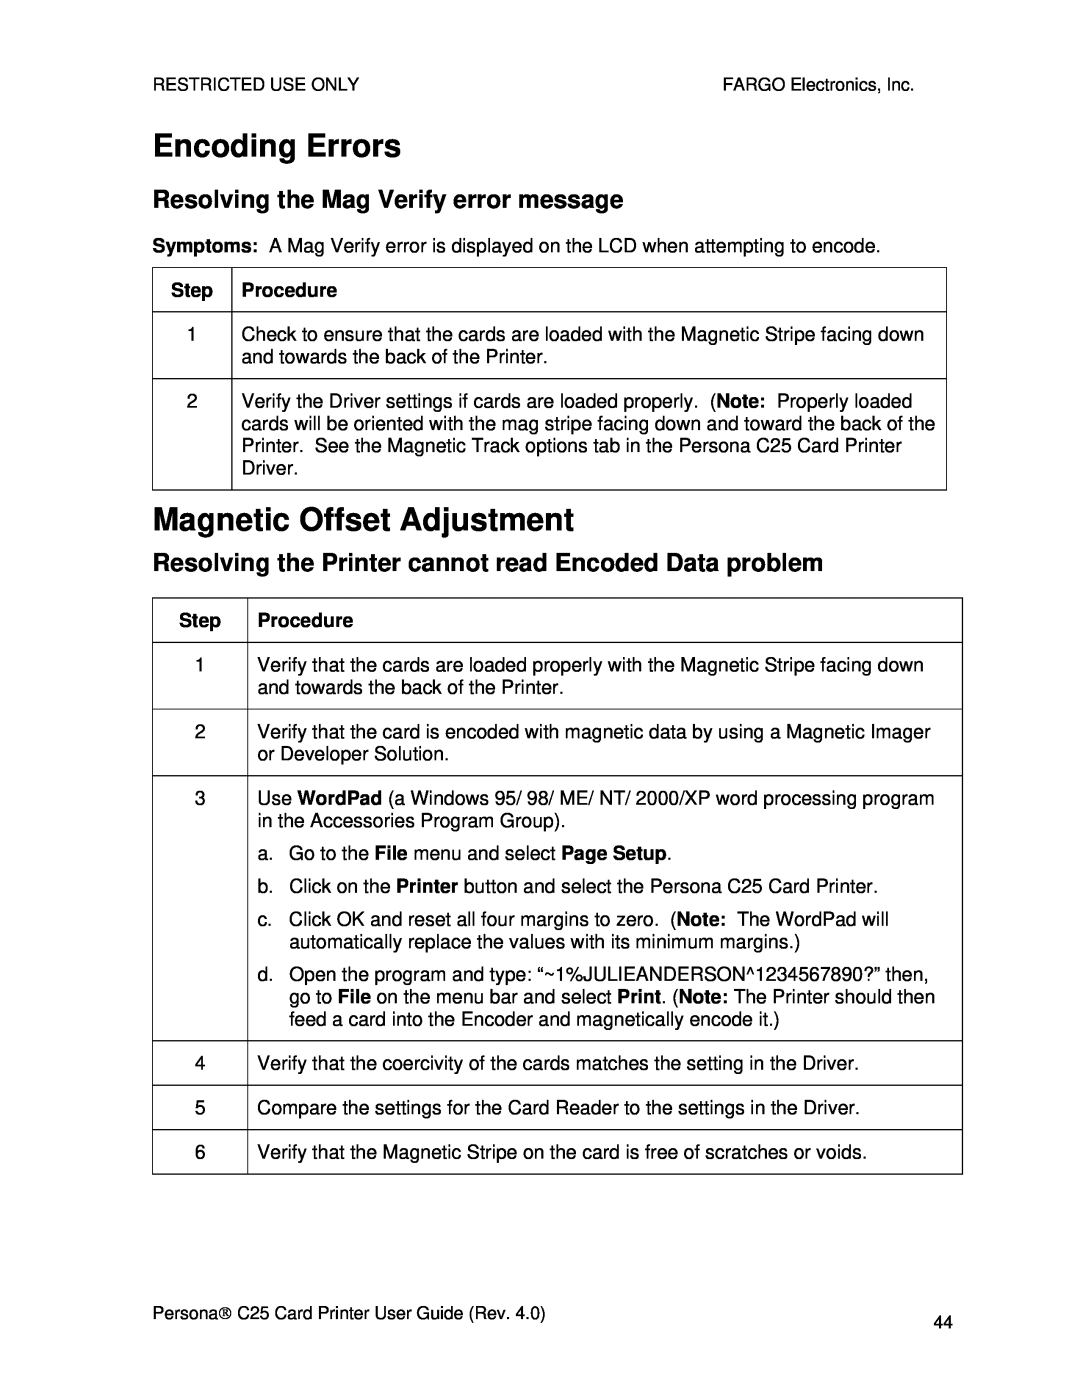 FARGO electronic S000256 manual Encoding Errors, Magnetic Offset Adjustment, Resolving the Mag Verify error message 